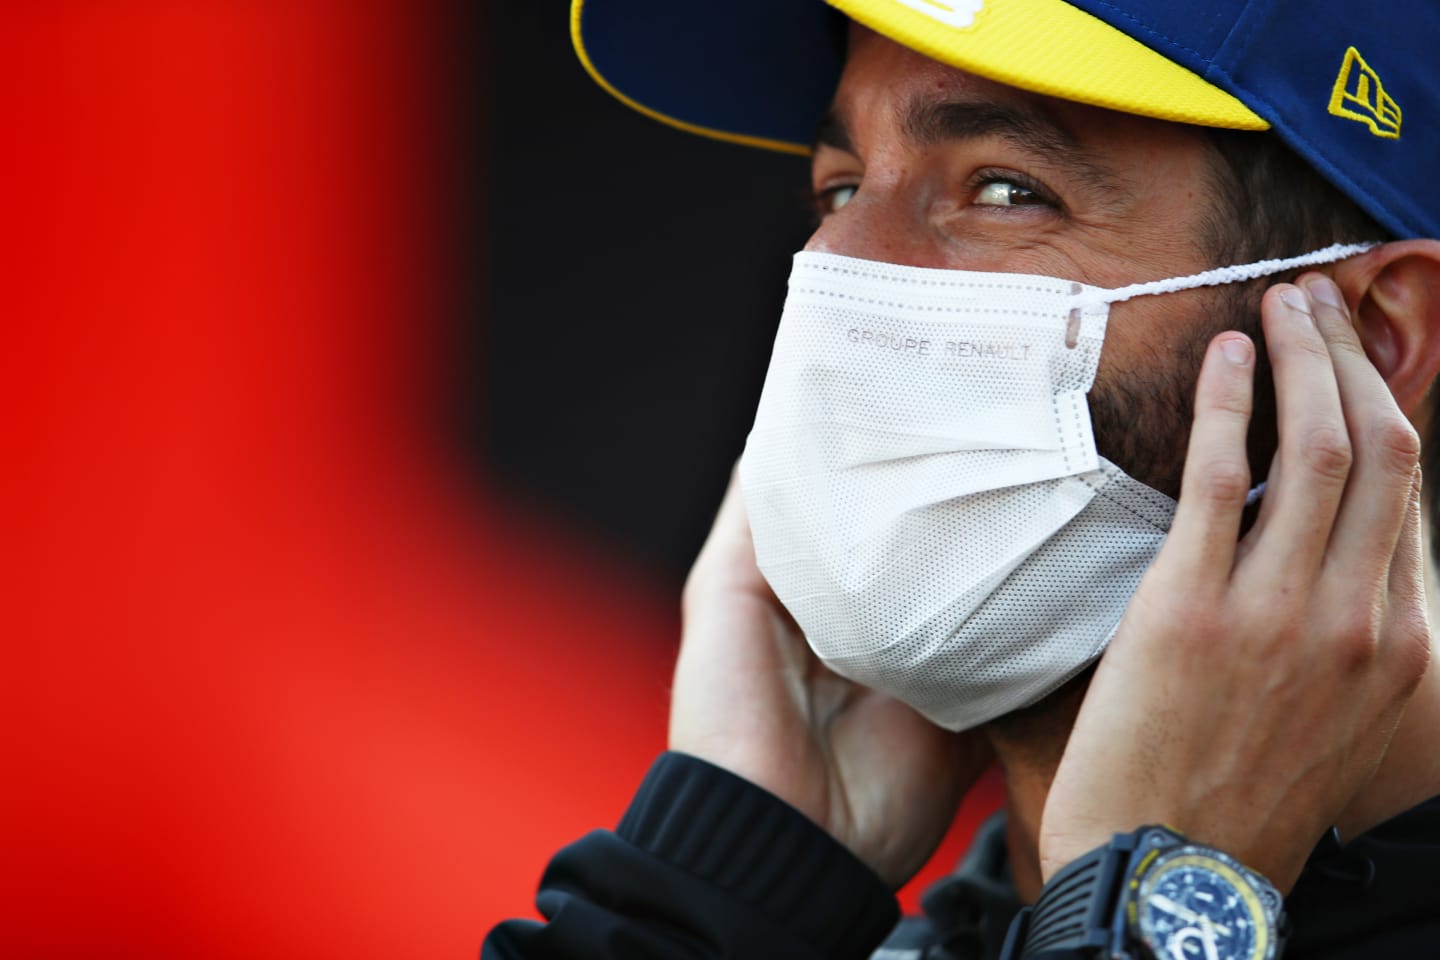 IMOLA, ITALY - OCTOBER 30: Daniel Ricciardo of Australia and Renault Sport F1 looks on in the